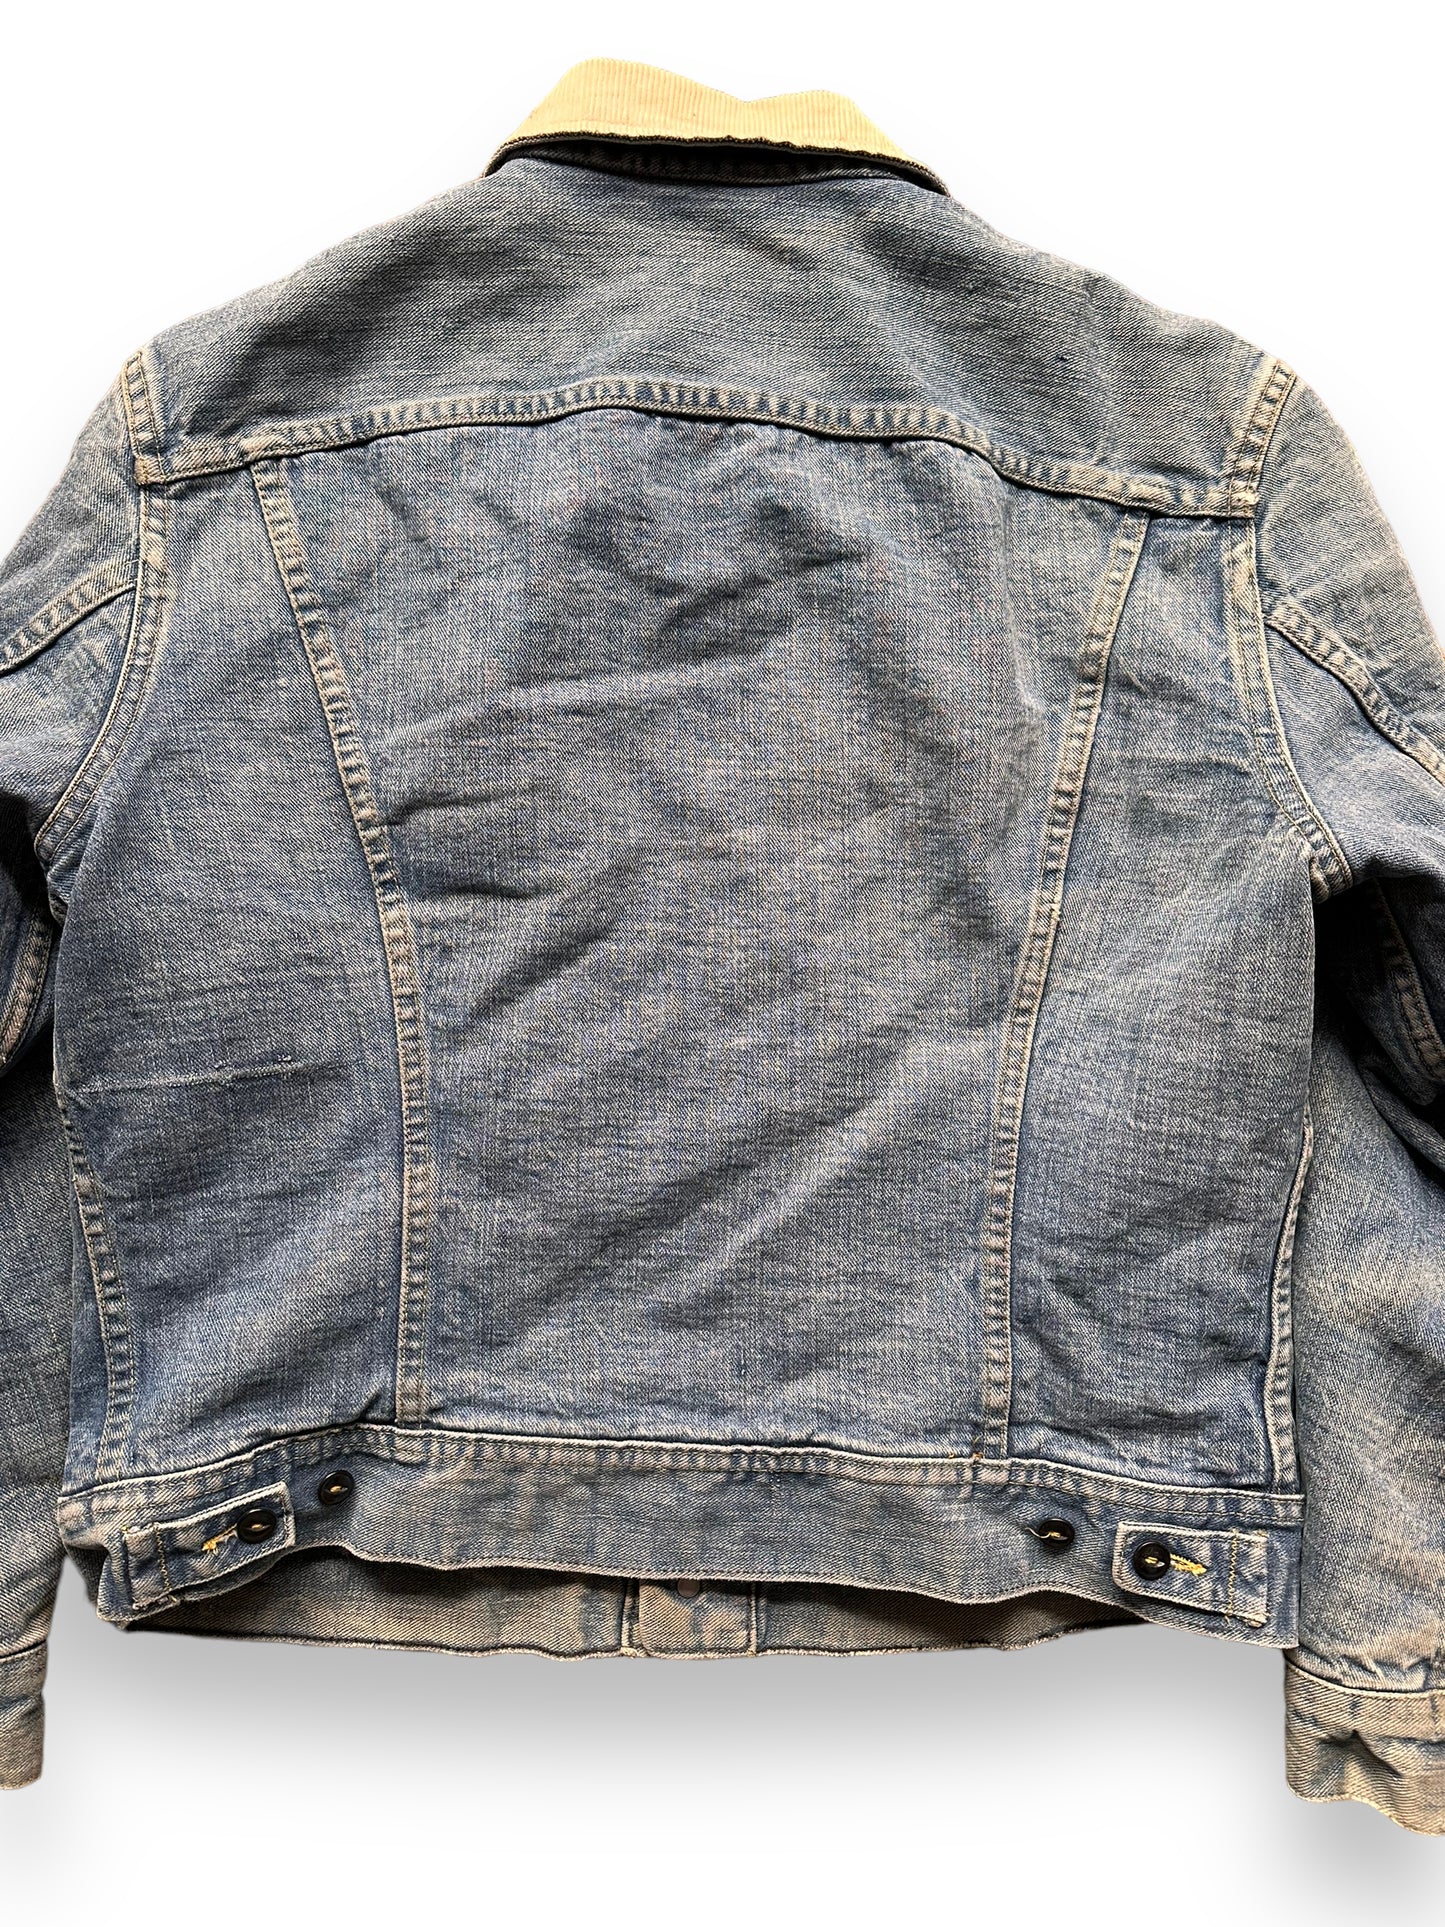 Rear Detail on Vintage Blanket Lined Lee Storm Rider Denim Jacket SZ L| Barn Owl Vintage | Seattle True Vintage Workwear